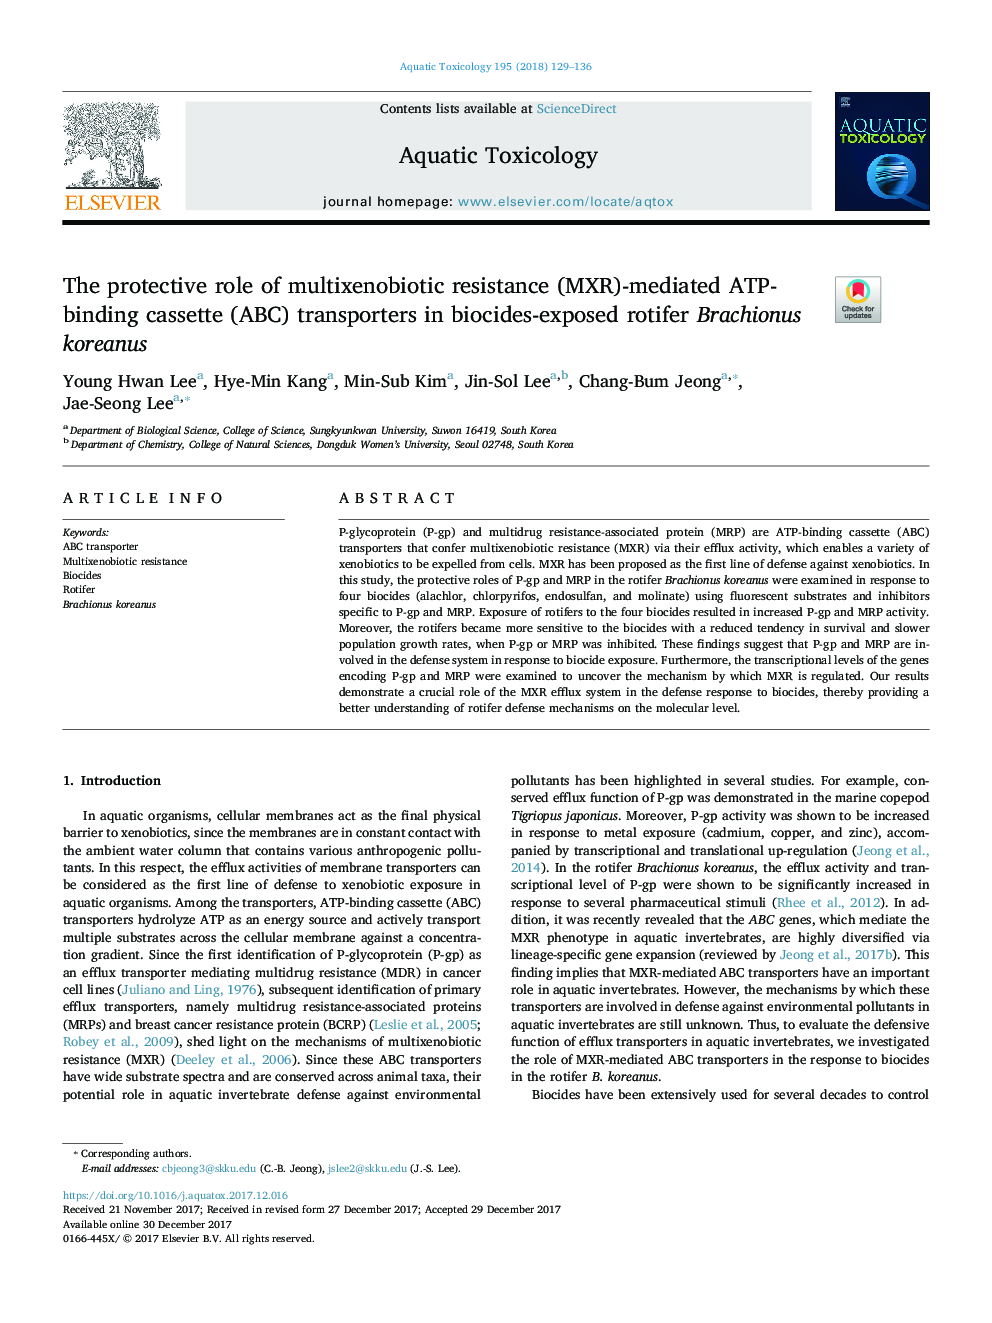 The protective role of multixenobiotic resistance (MXR)-mediated ATP-binding cassette (ABC) transporters in biocides-exposed rotifer Brachionus koreanus